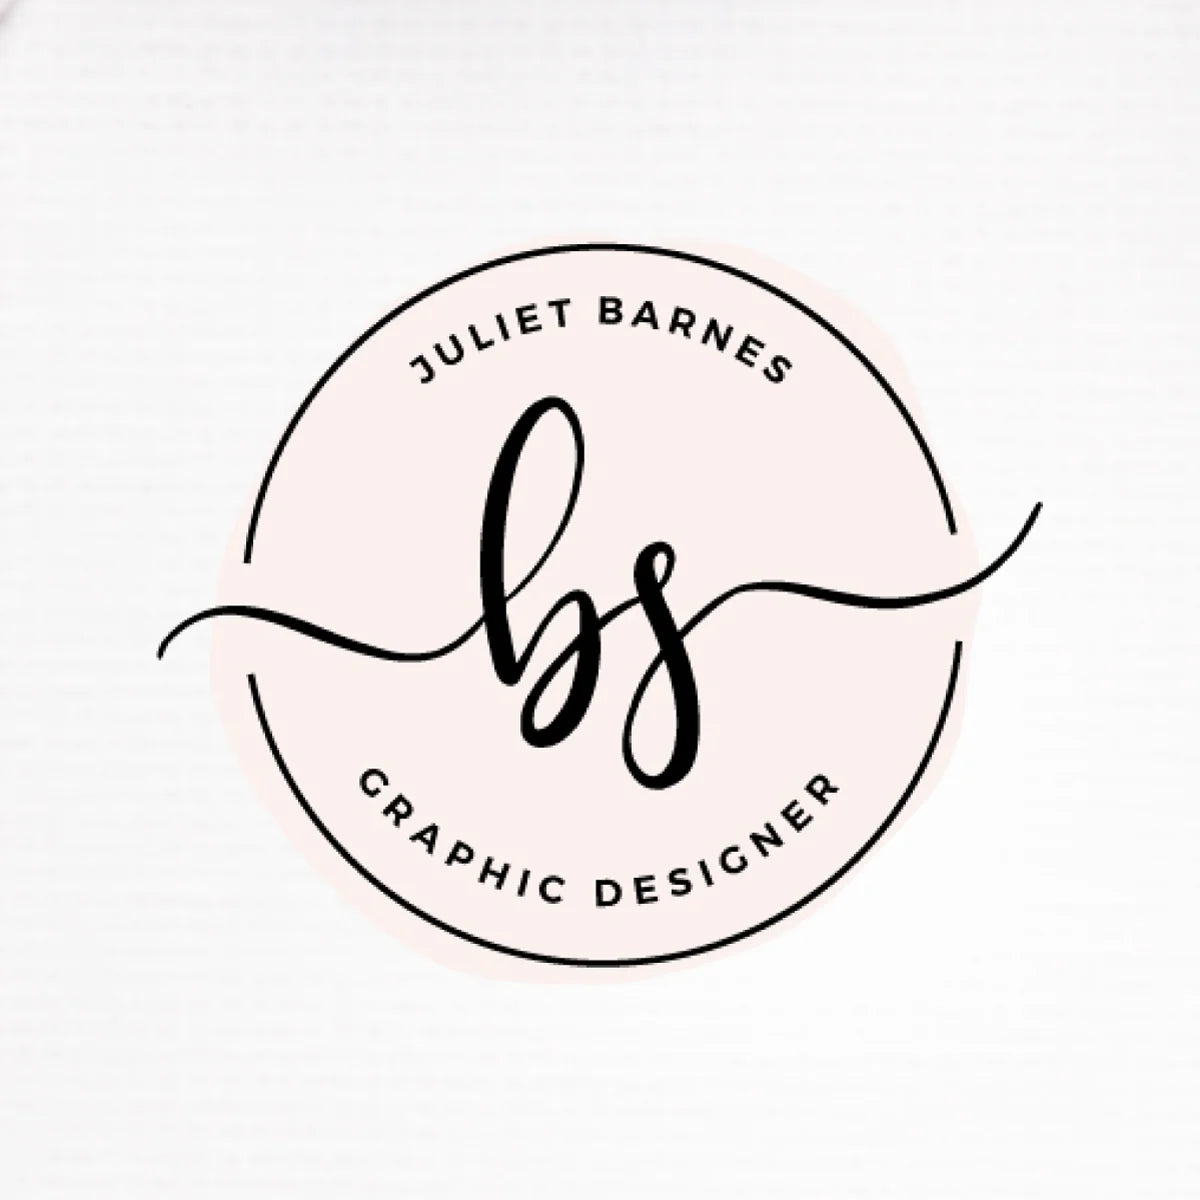 Custom logo design service | I will design a custom logo for any business or style